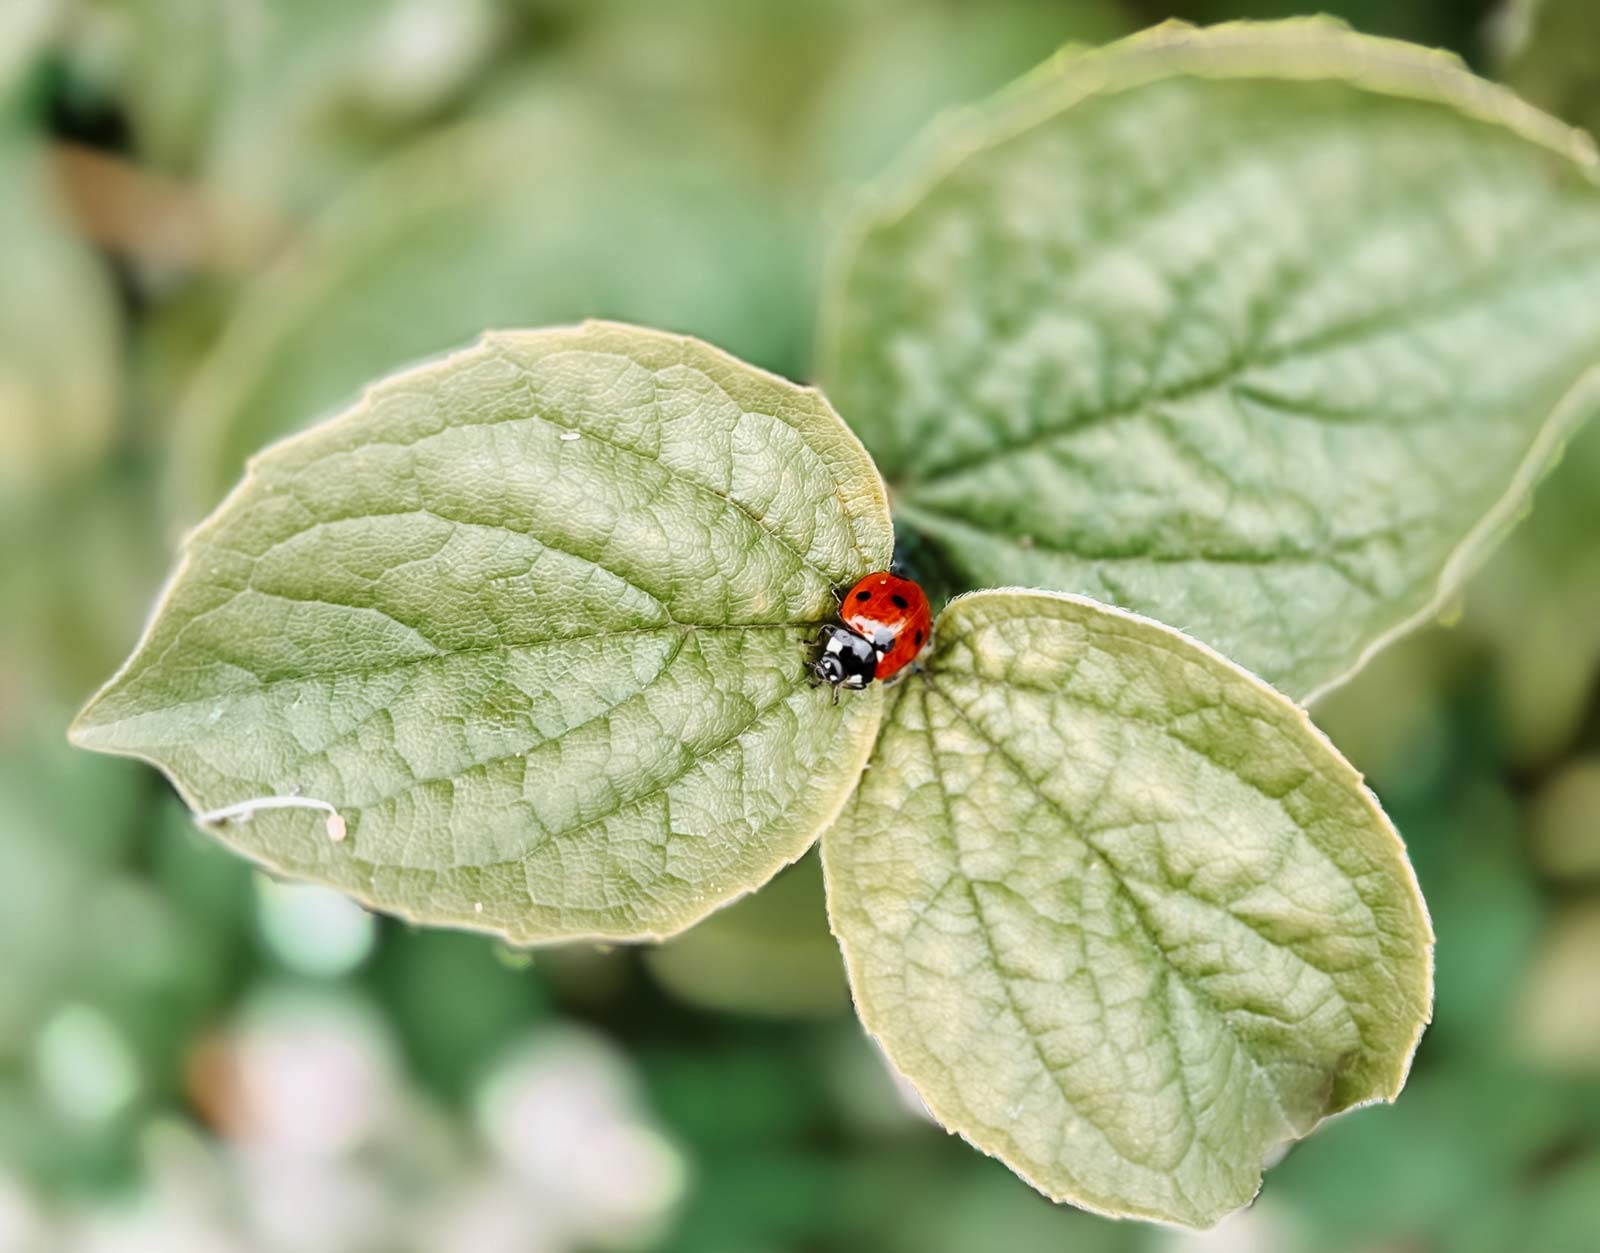 Ladybug on a leaf at the campsite near Cape Breton